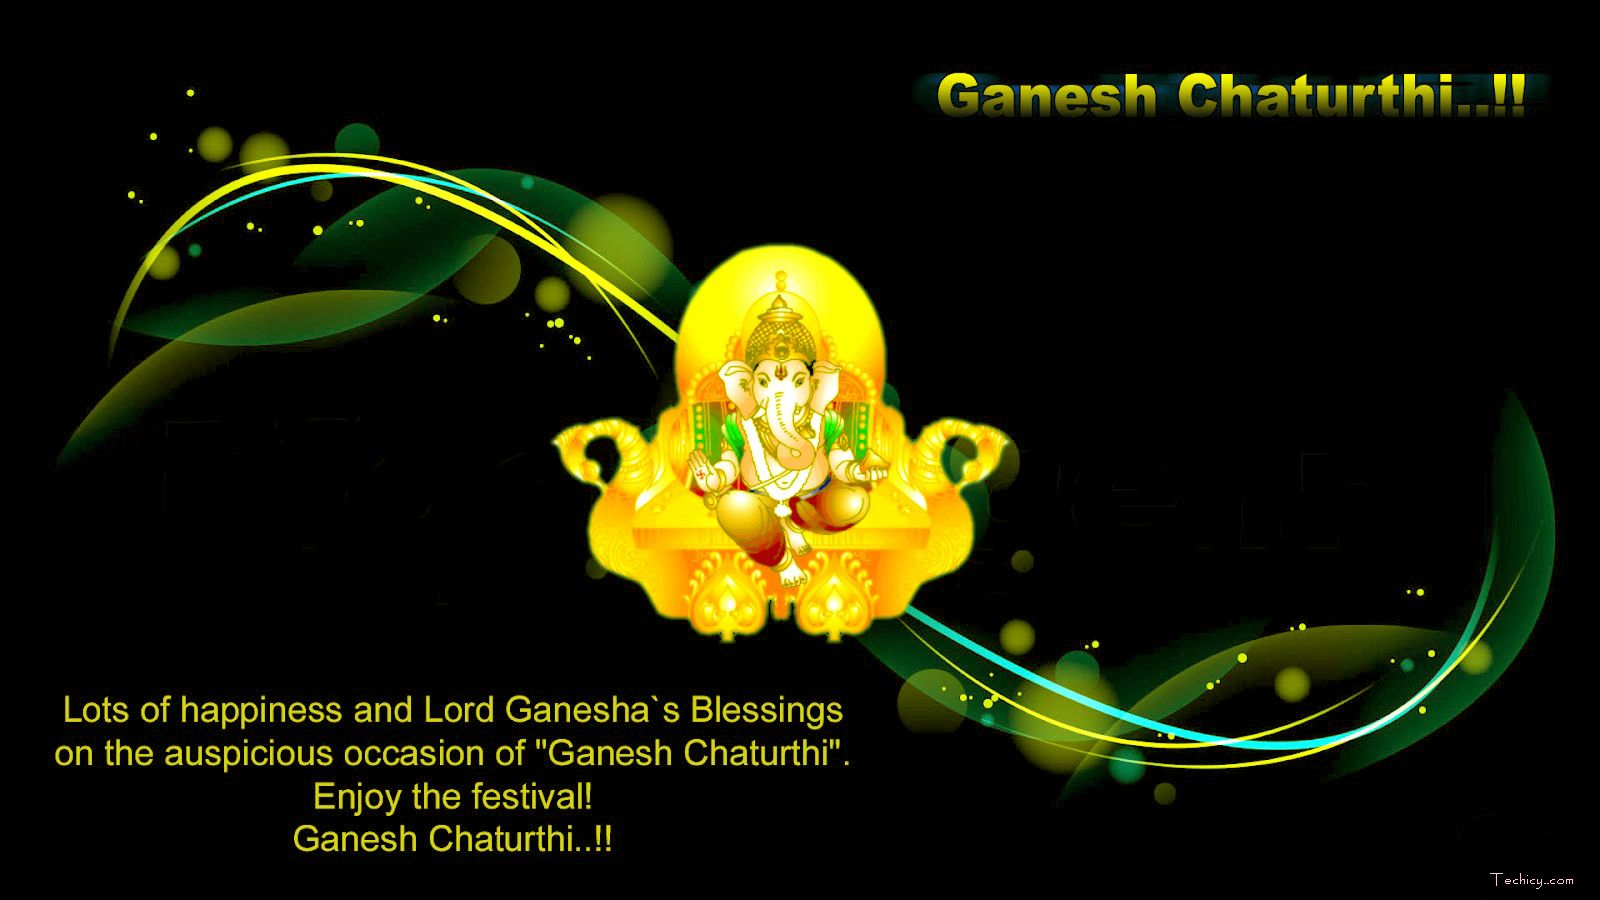 Ganesh Chaturthi HD Image, Wallpaper, Pics, and Photo Free